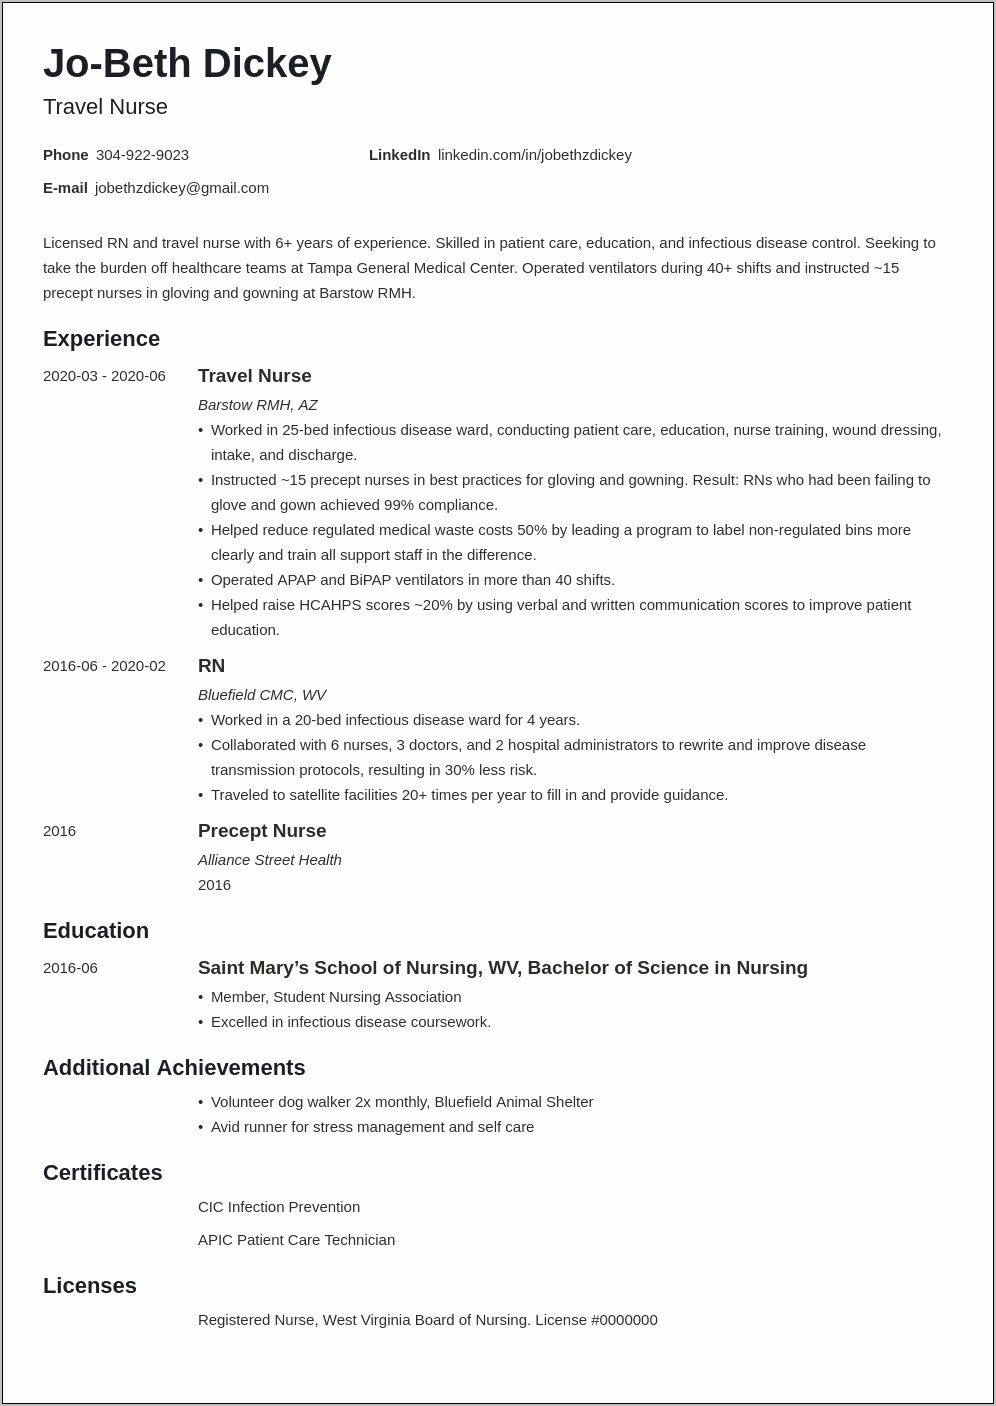 Nursing Resume For Per Diem Jobs